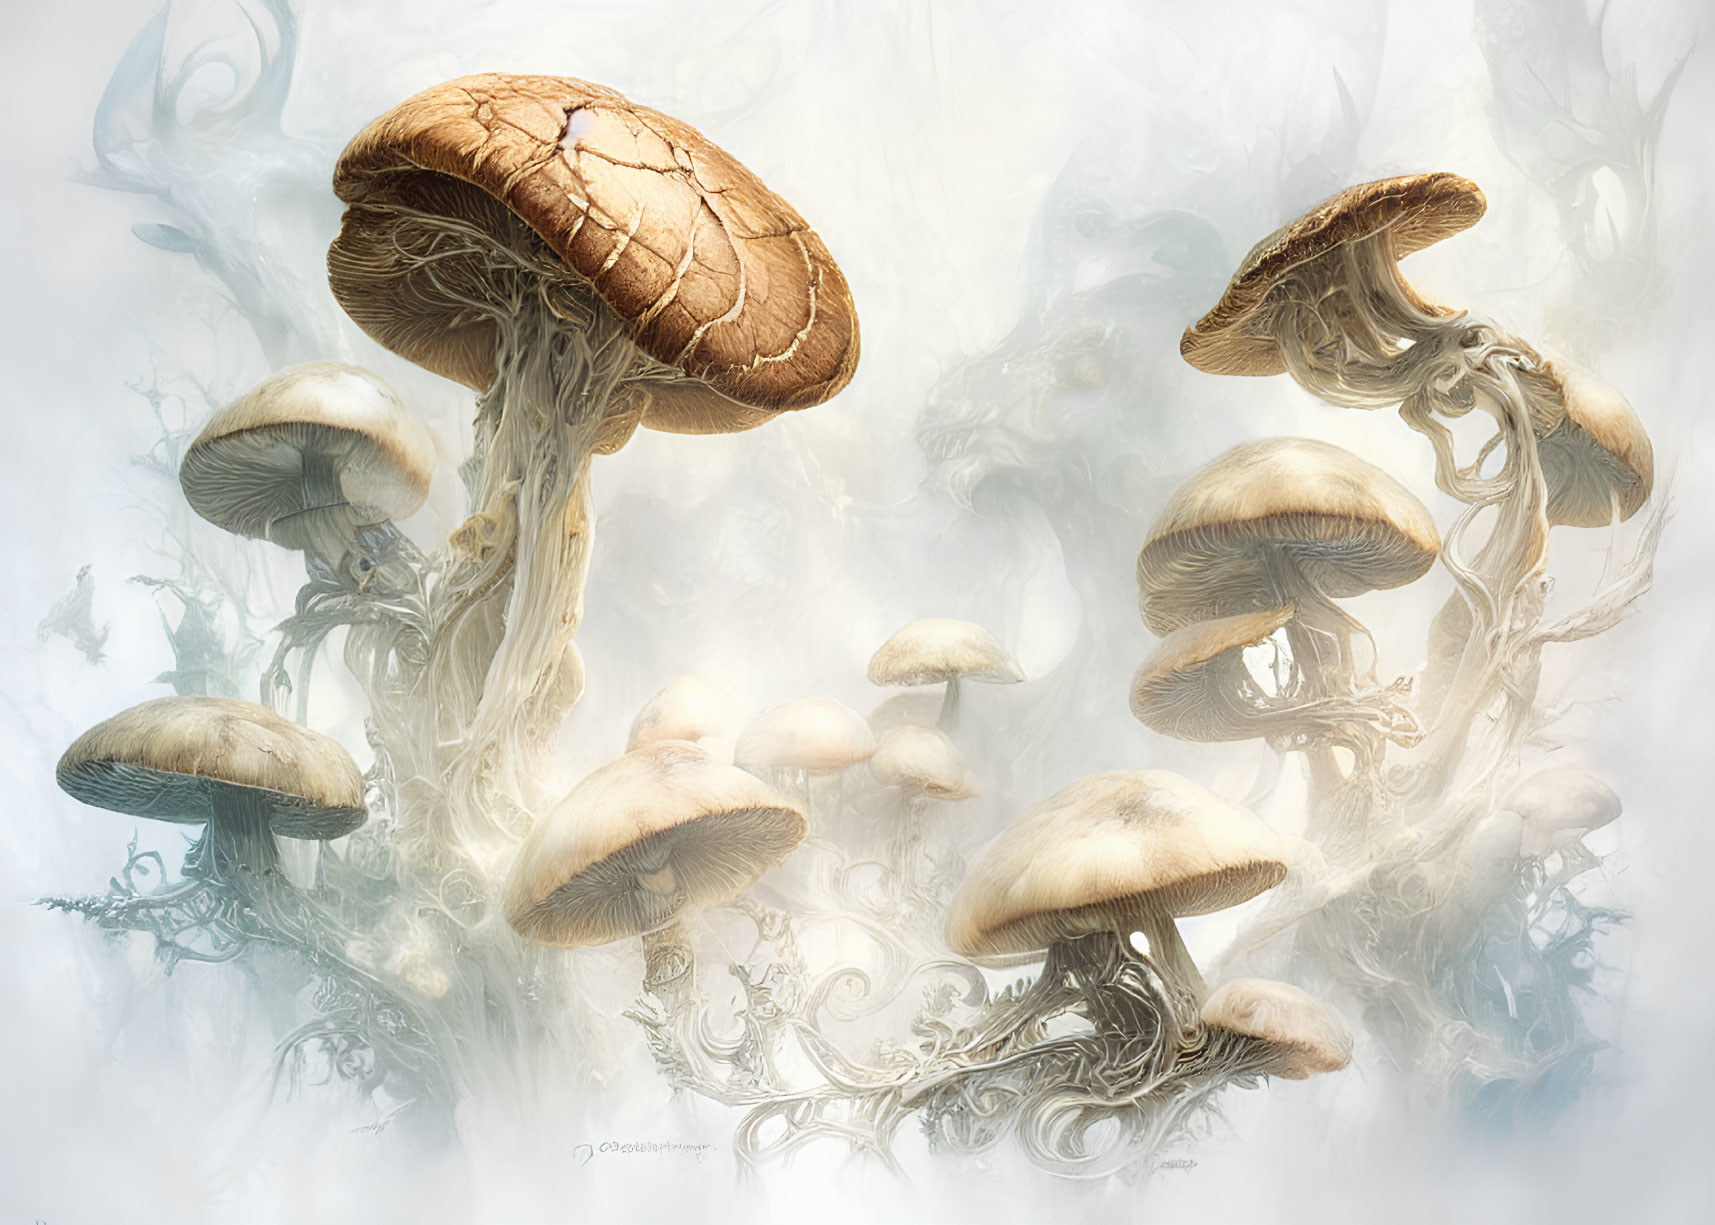 Fantasy illustration: oversized whimsical mushrooms in misty setting